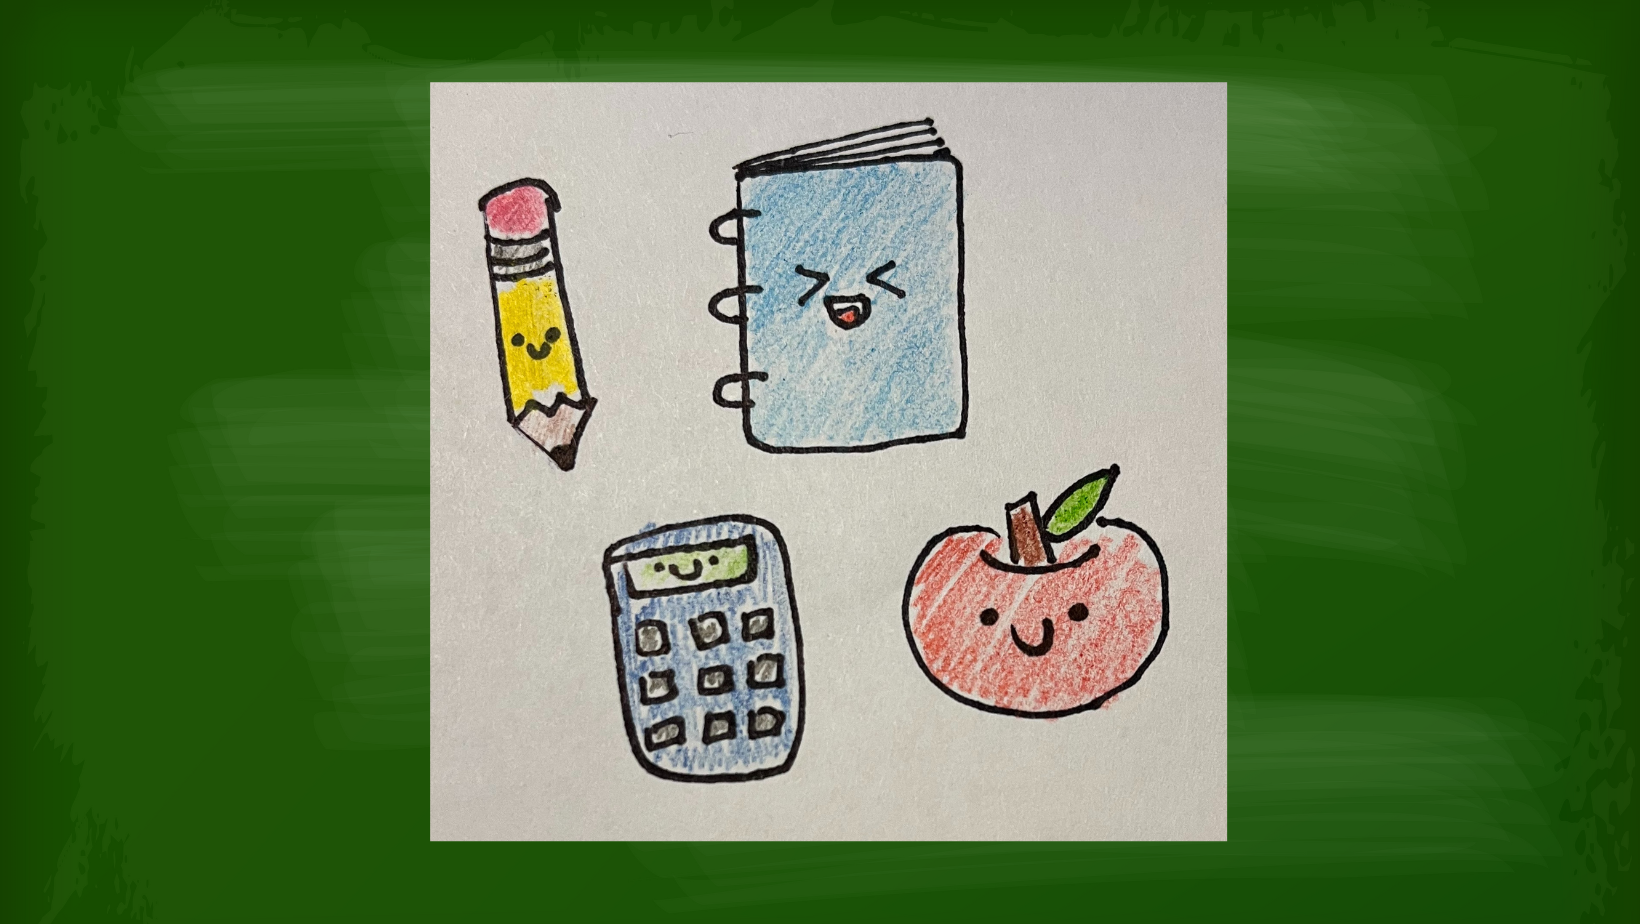 Drawings of Kawaii pencil, notebook, calculator, and apple